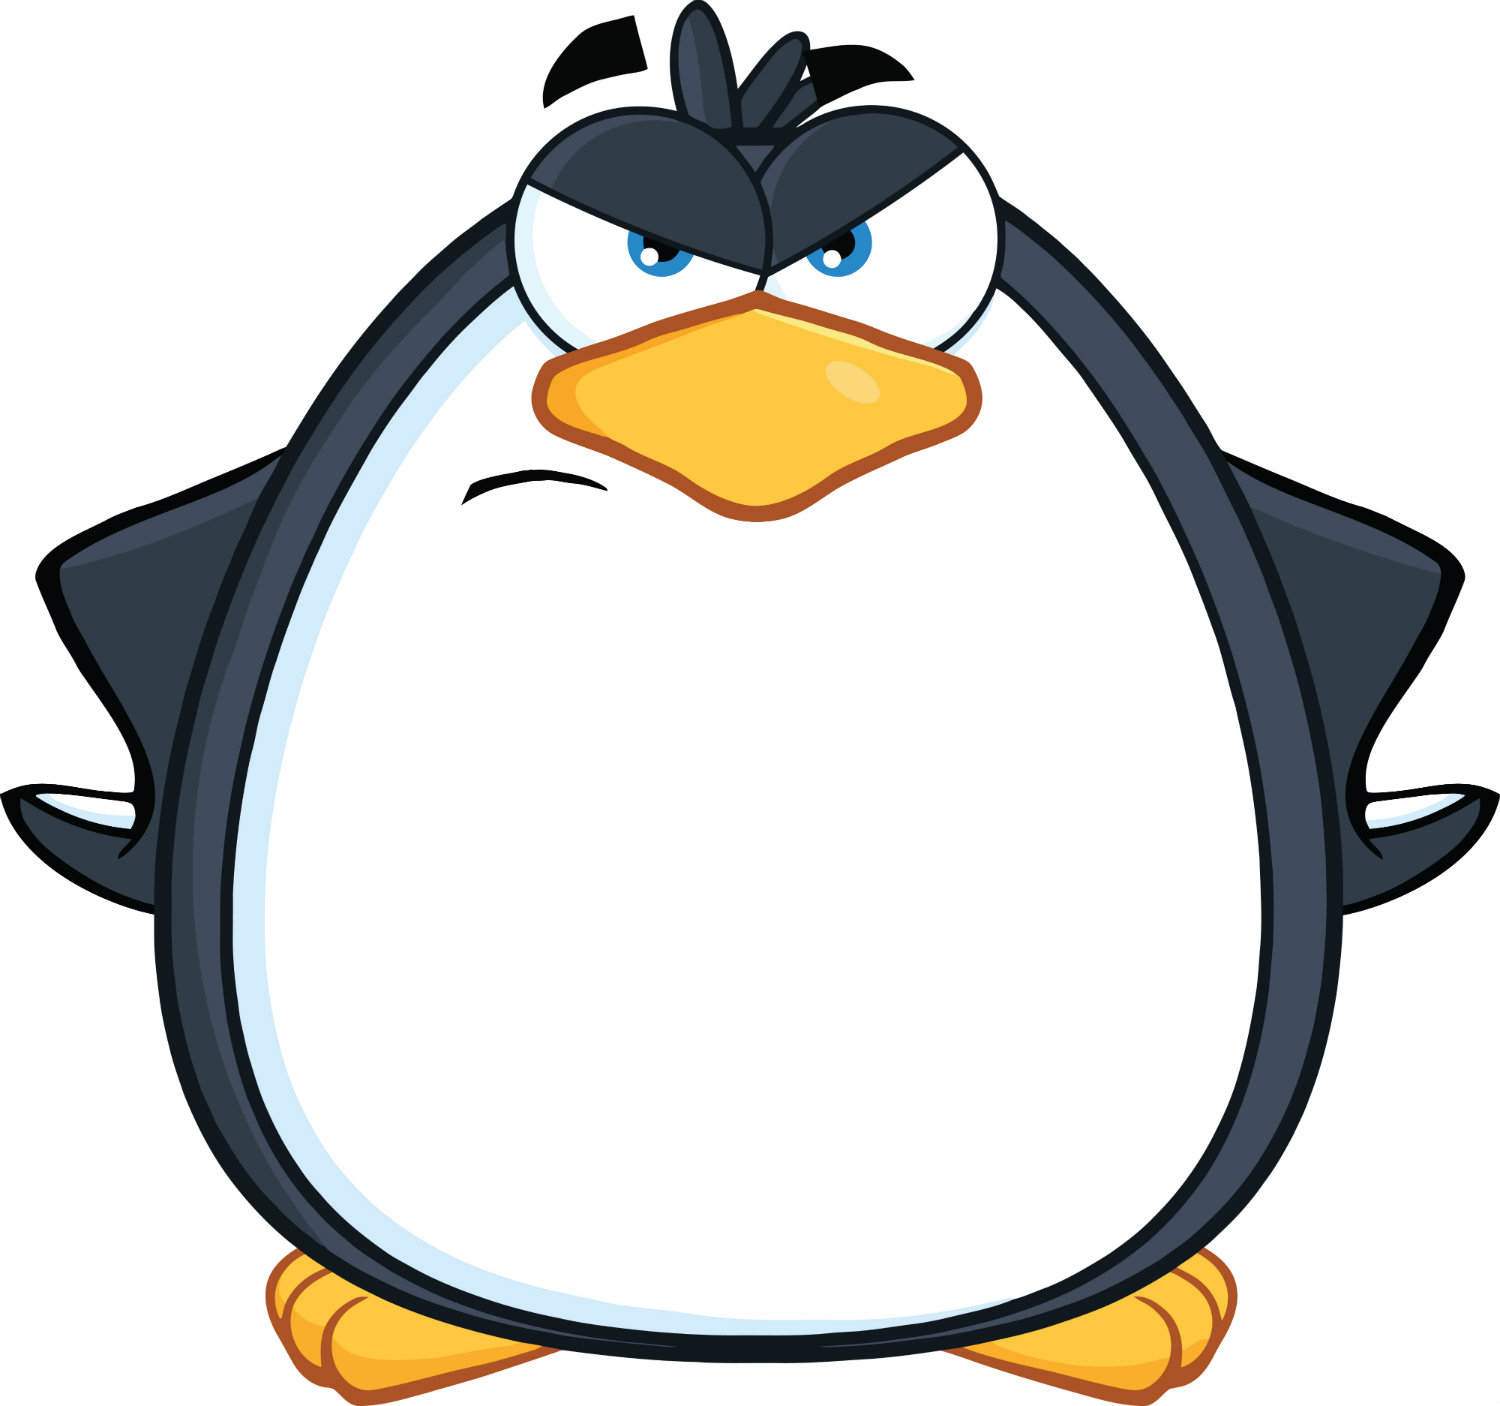 Angry Penguin Cartoon